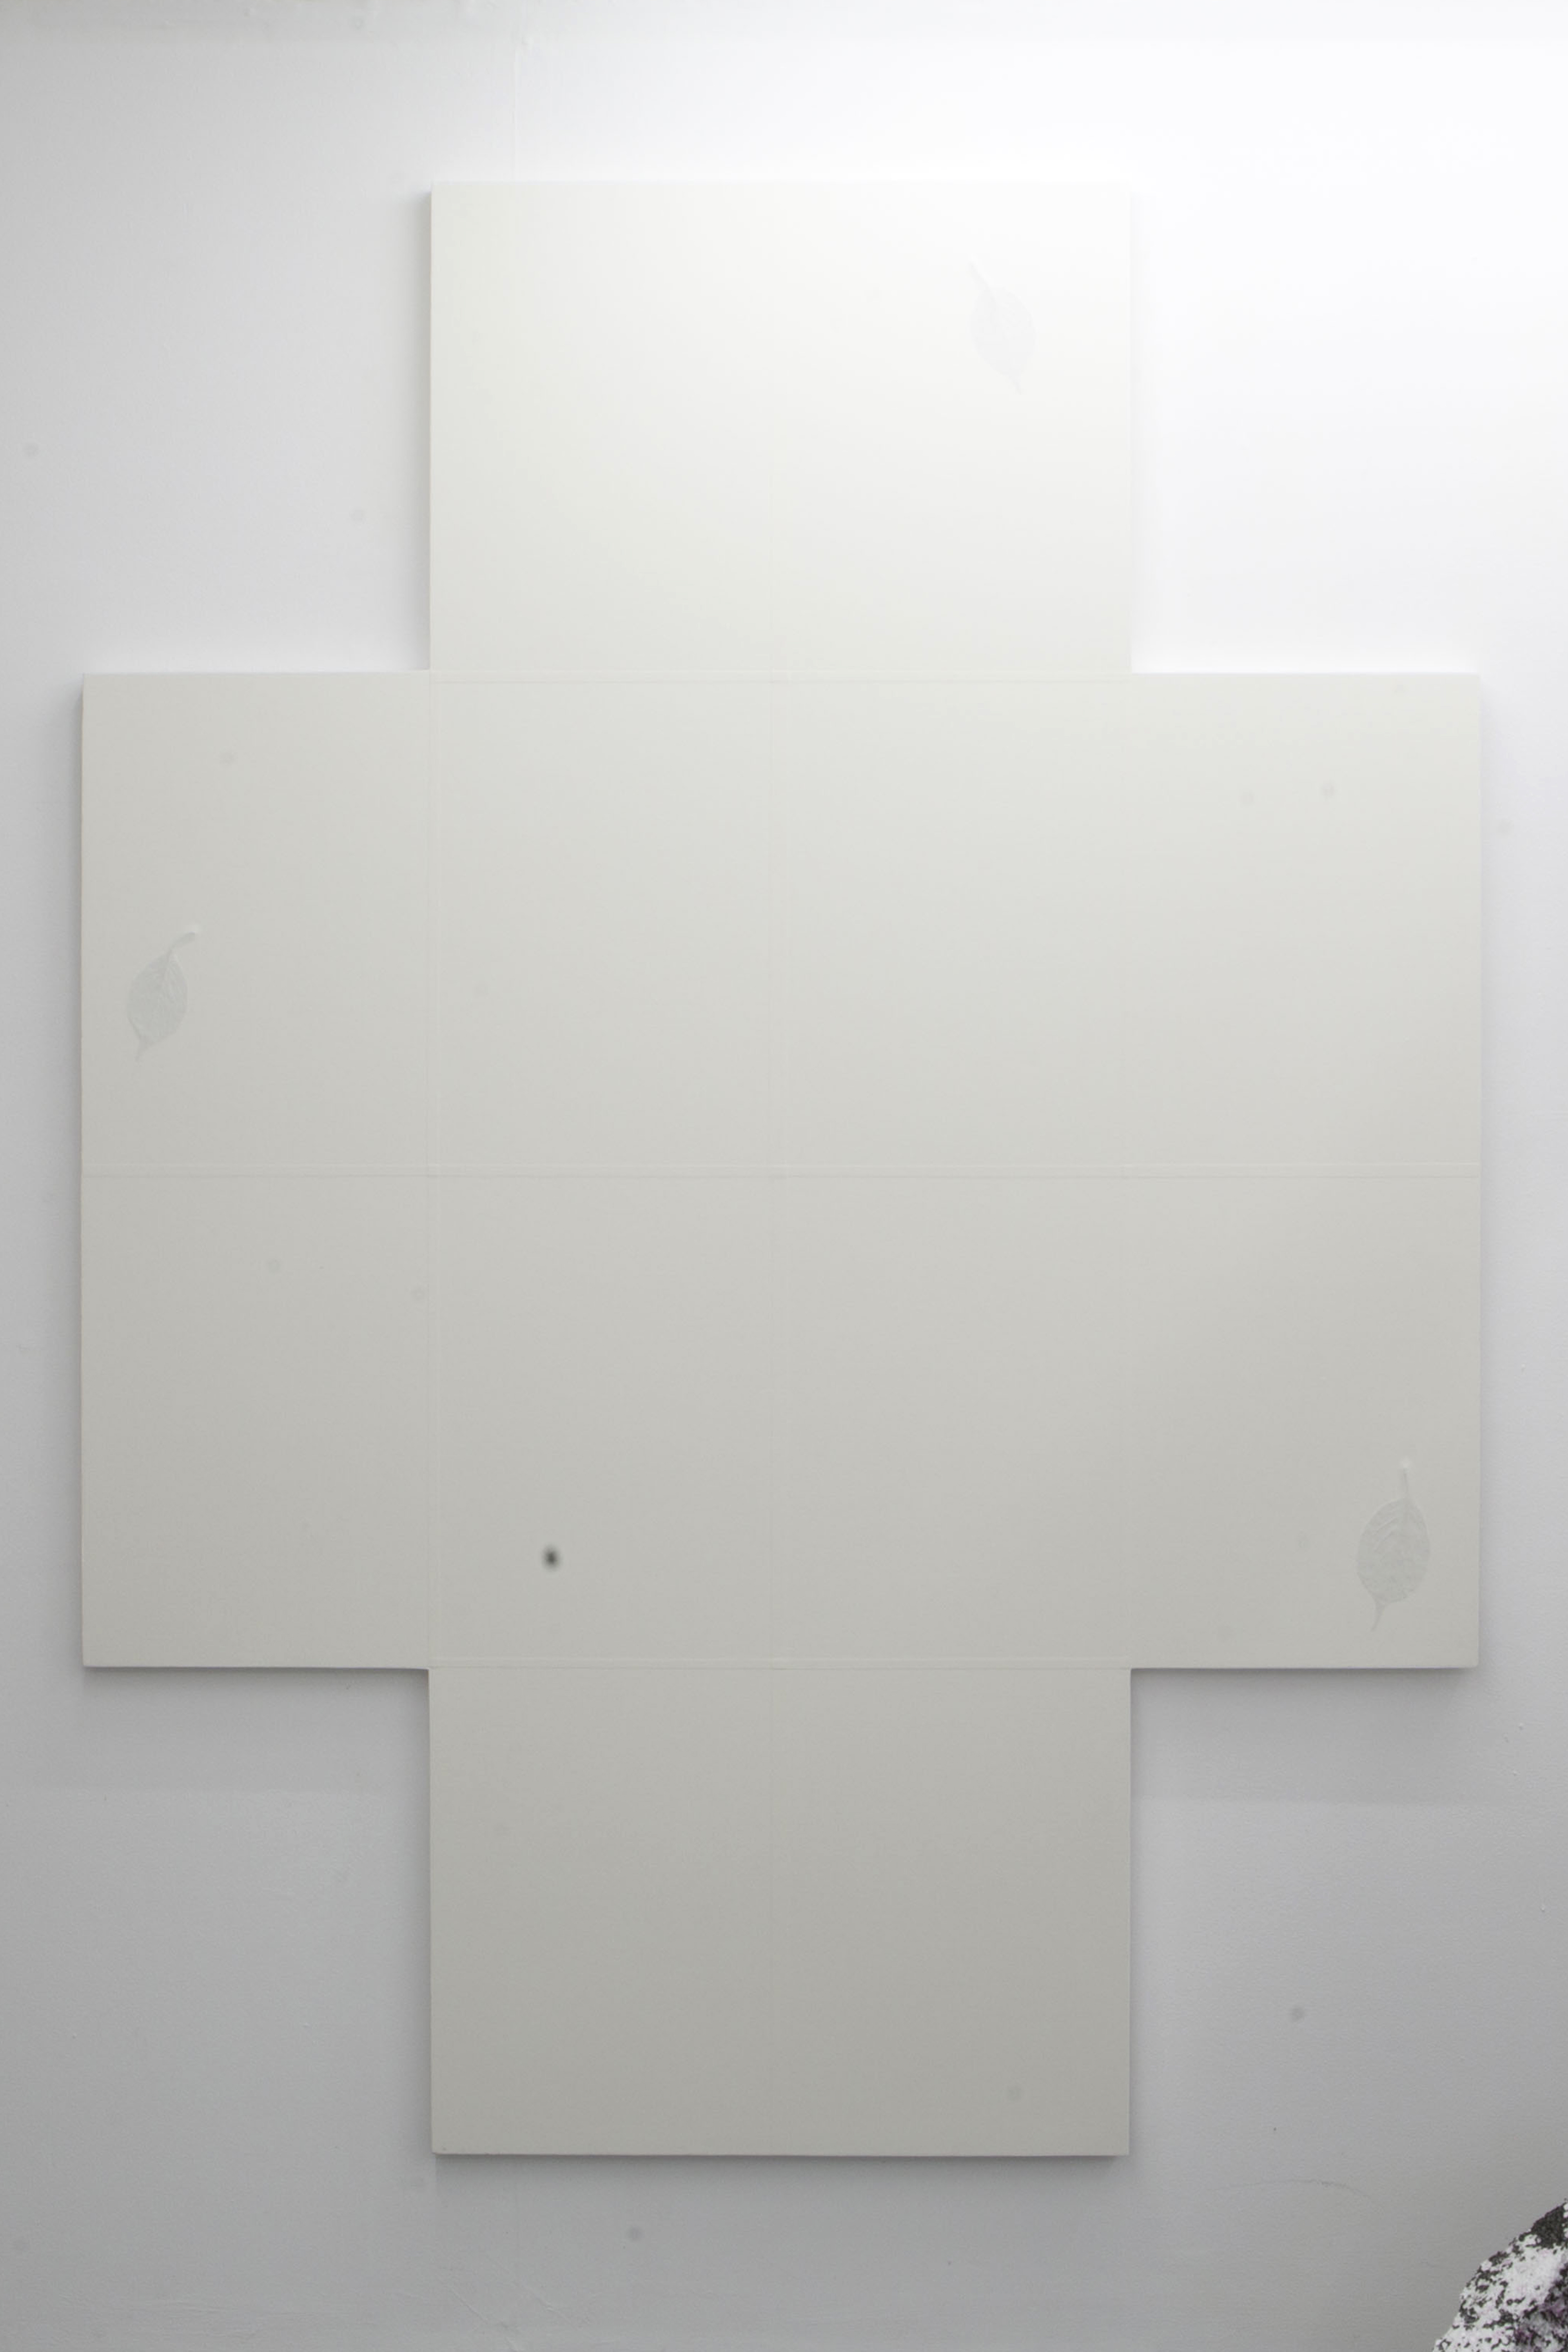 John Robertson Bosco (2019) 165.6x116.8cm; Leaves and paper on panel.